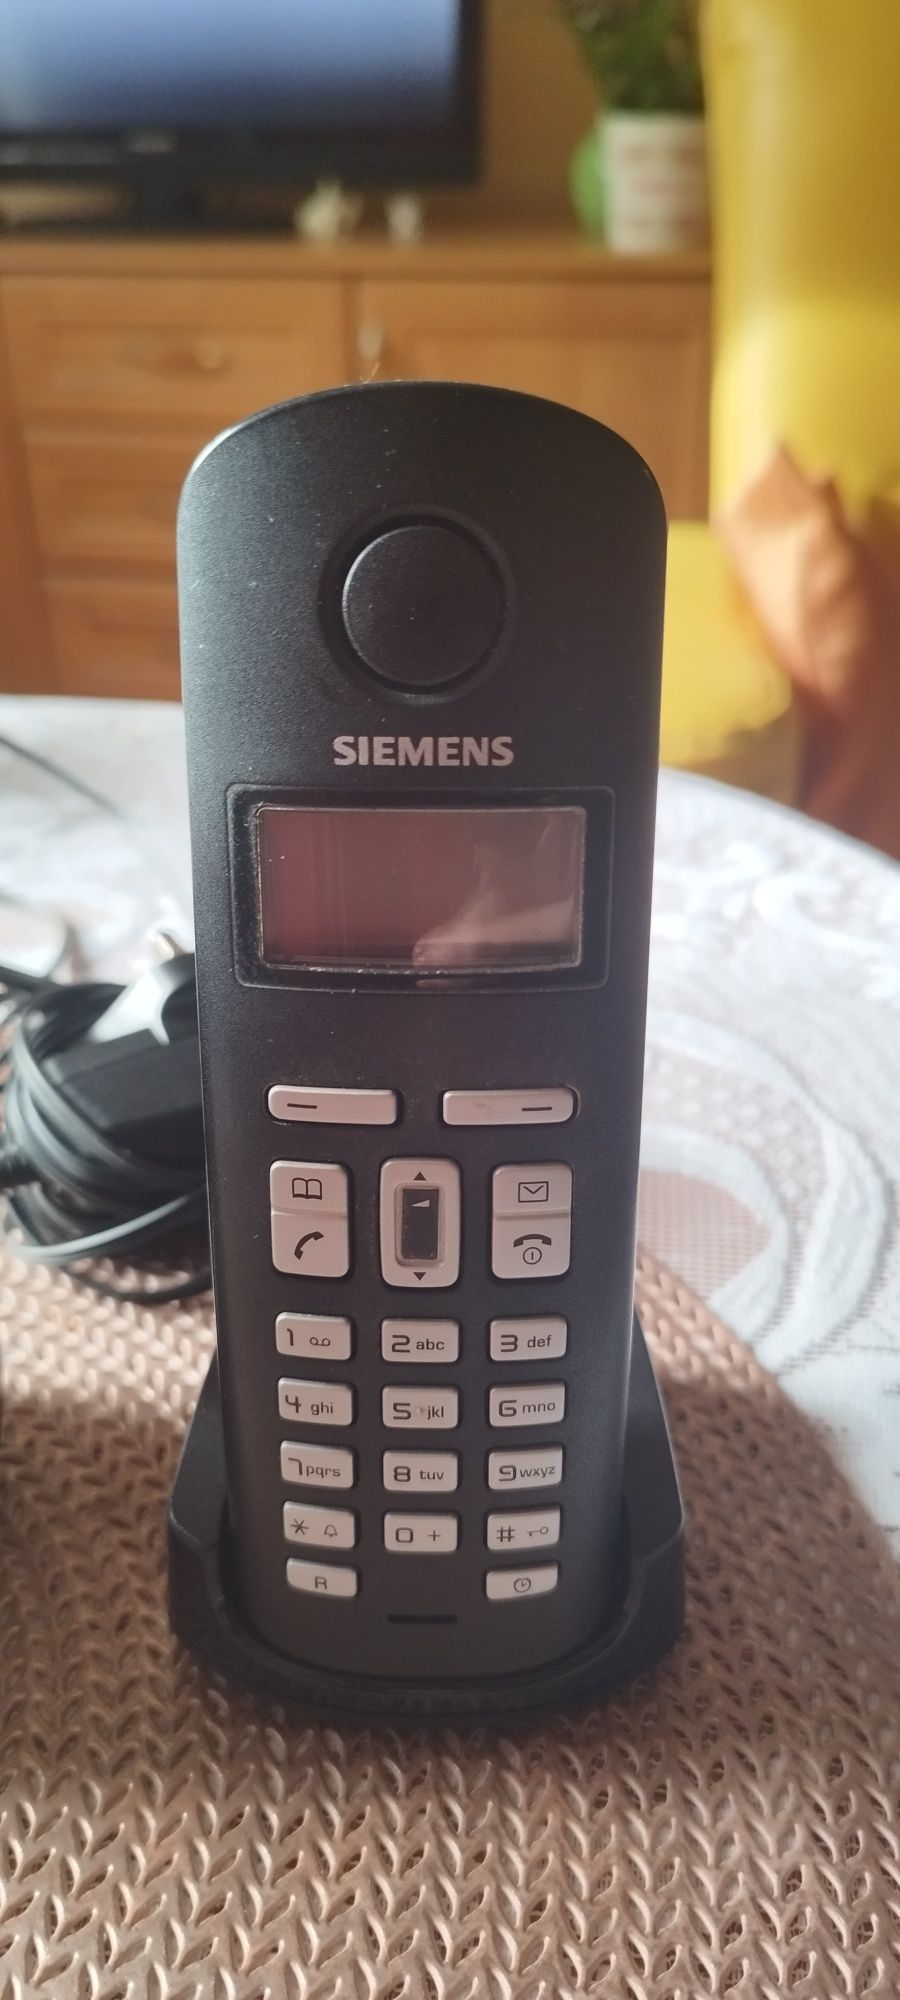 Telefon stacjonarny Siemens Gigaset AL145 2 słuchawki super stan.